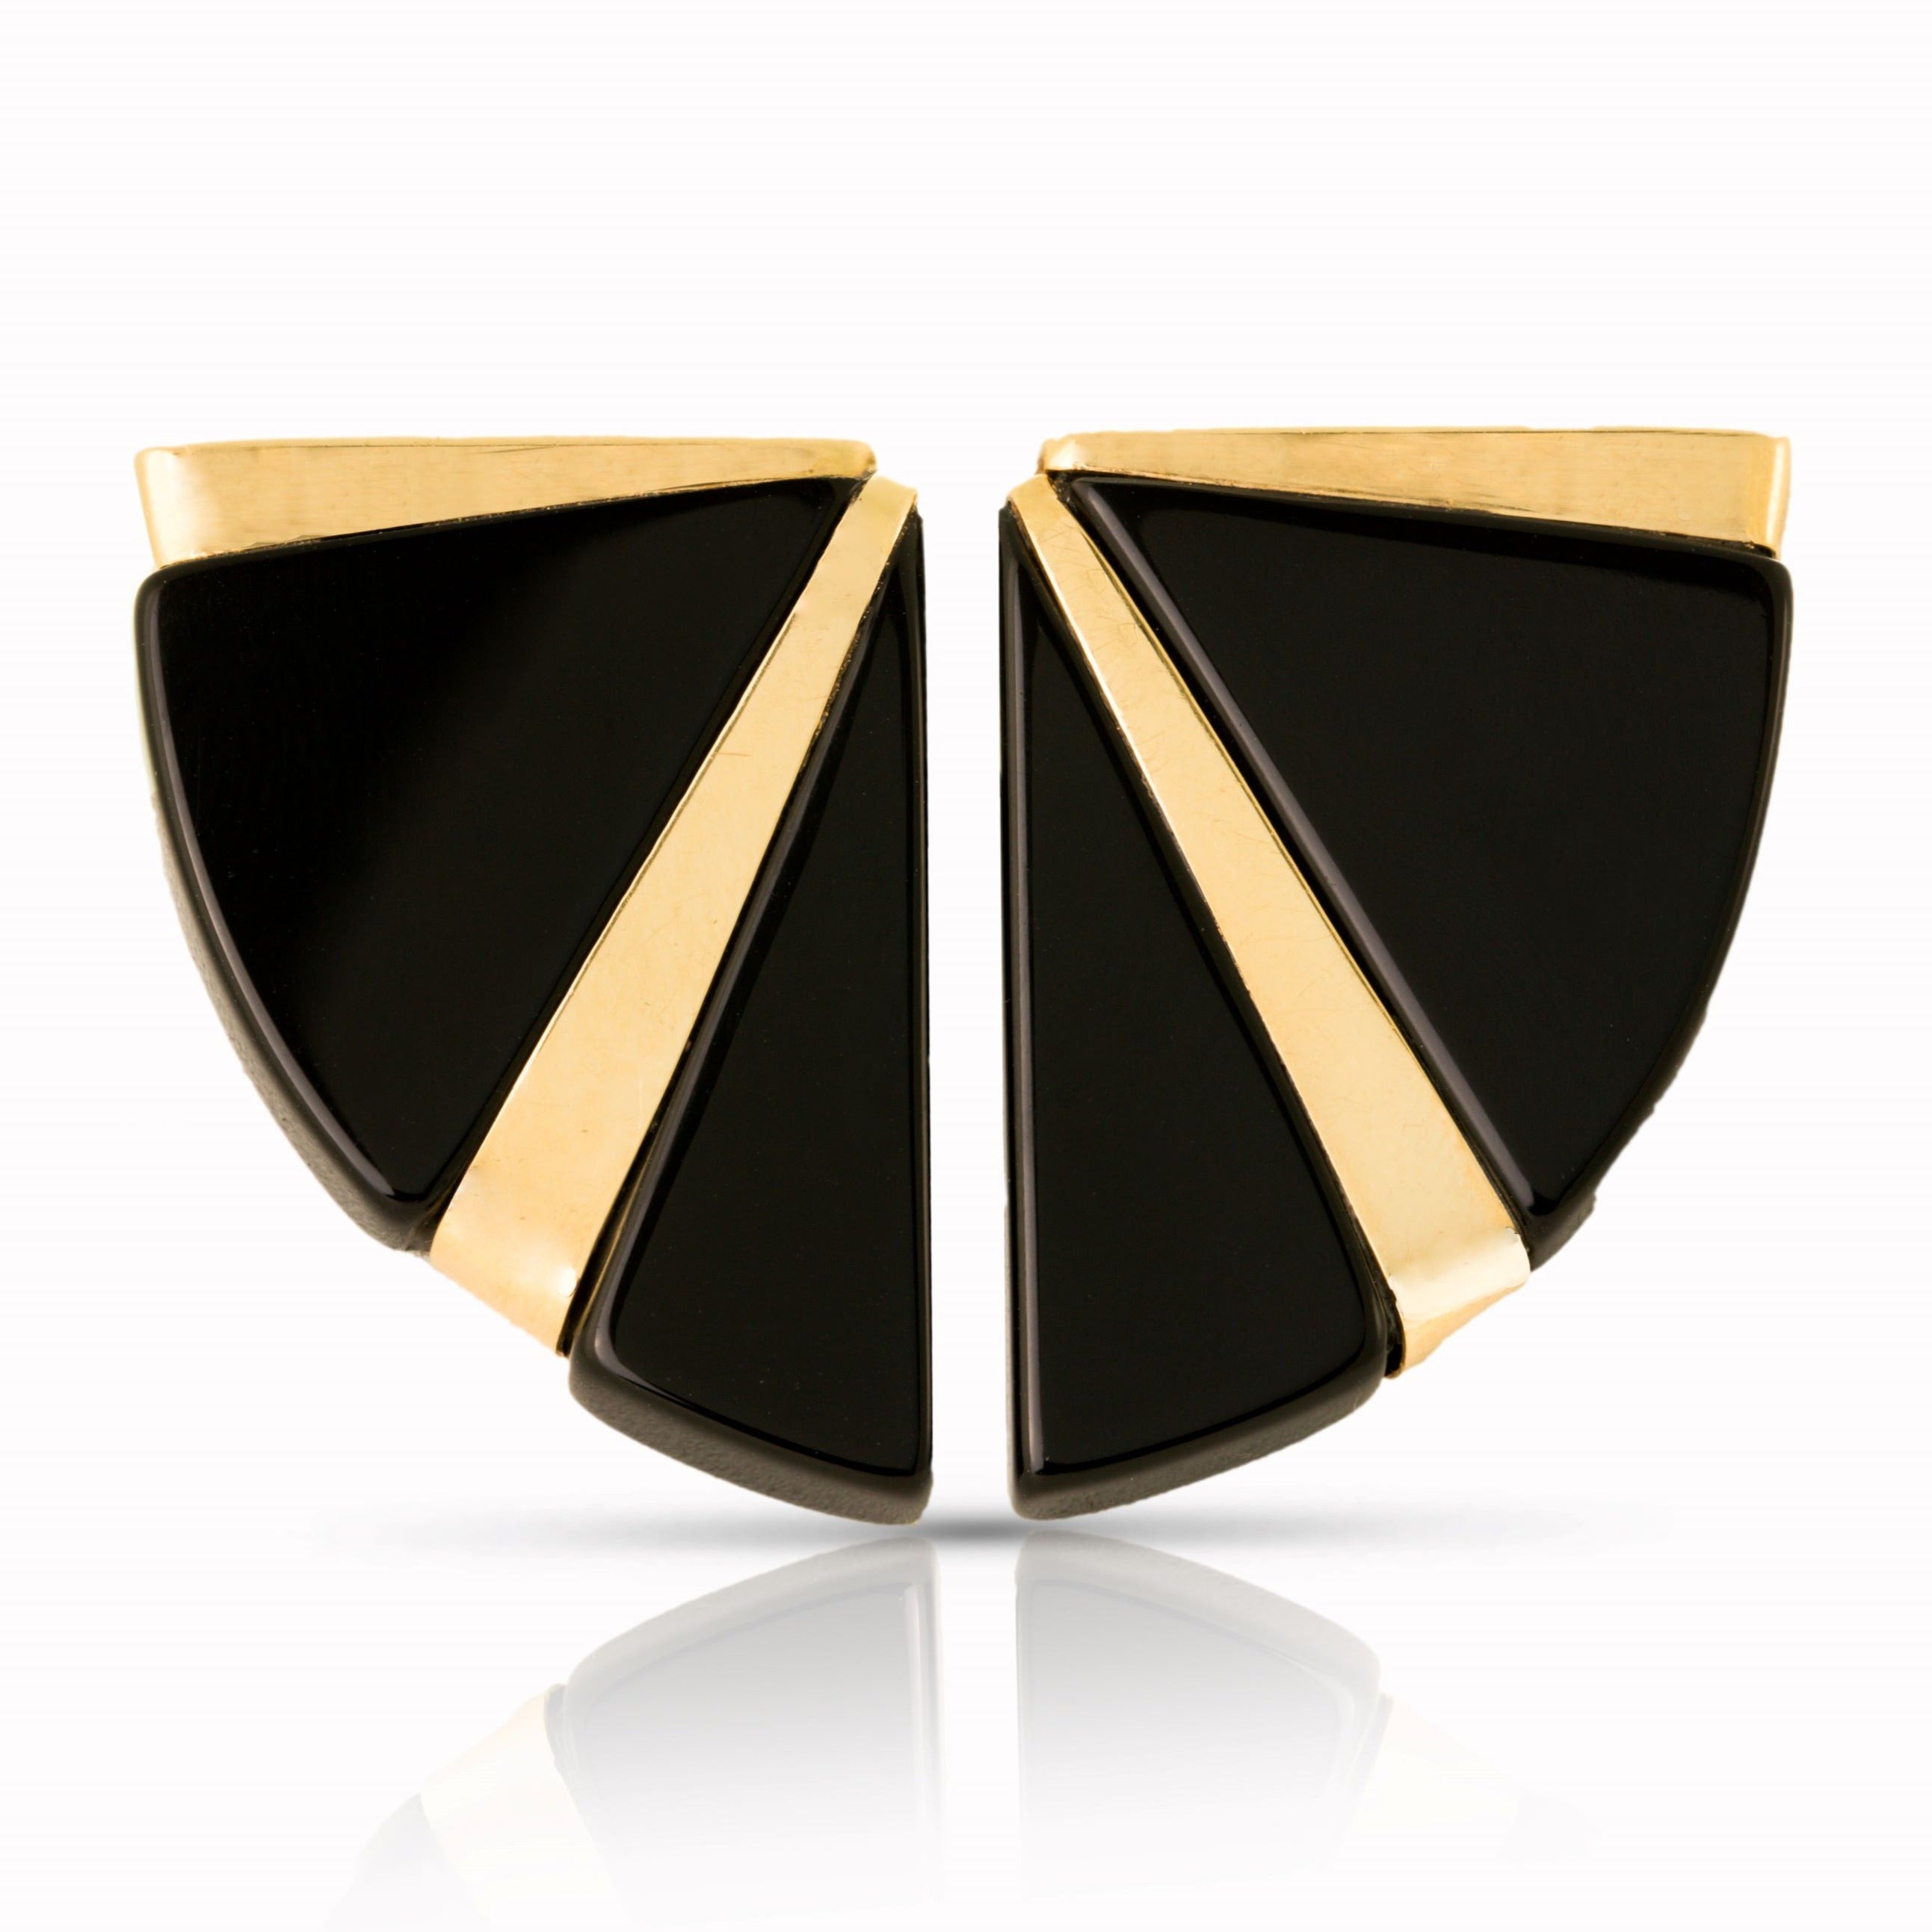 Vintage fan-shaped geometric earrings in 14ct gold and black onyx.